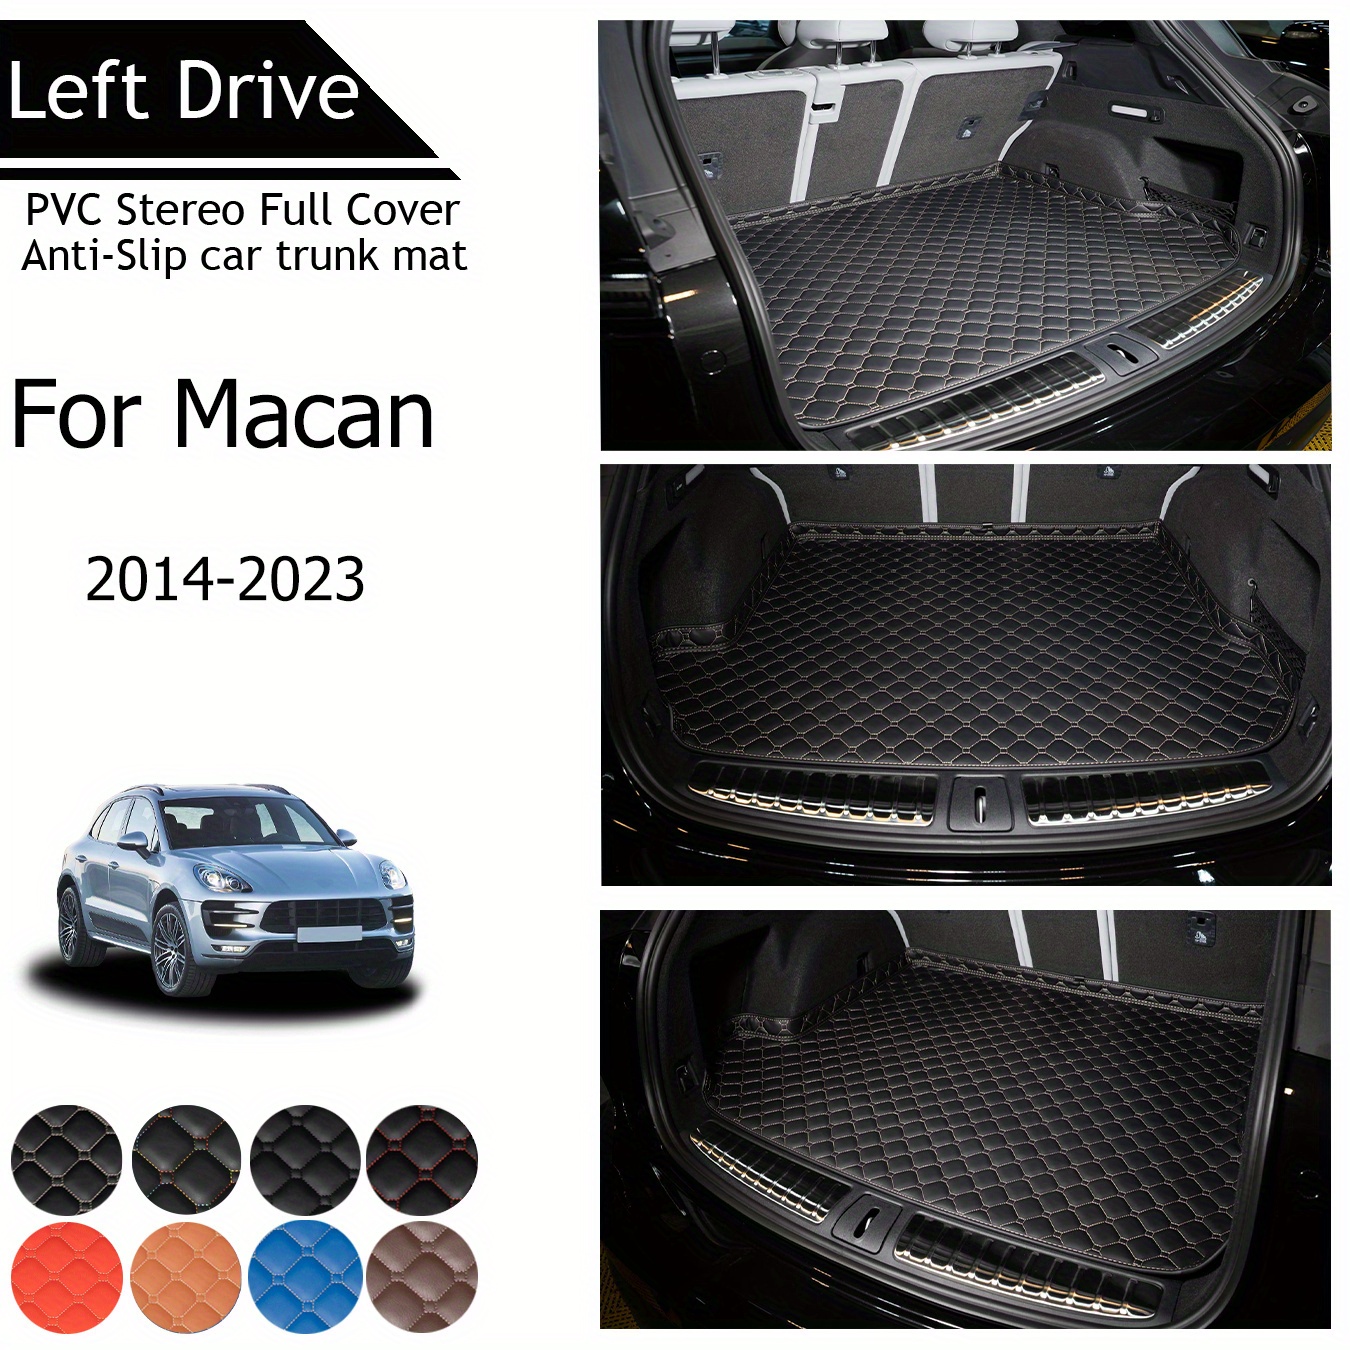 

Tegart [lhd] For Macan For 2014-2023 3 Layer Pvc Stereo Full Cover Anti-slip Car Trunk Mat